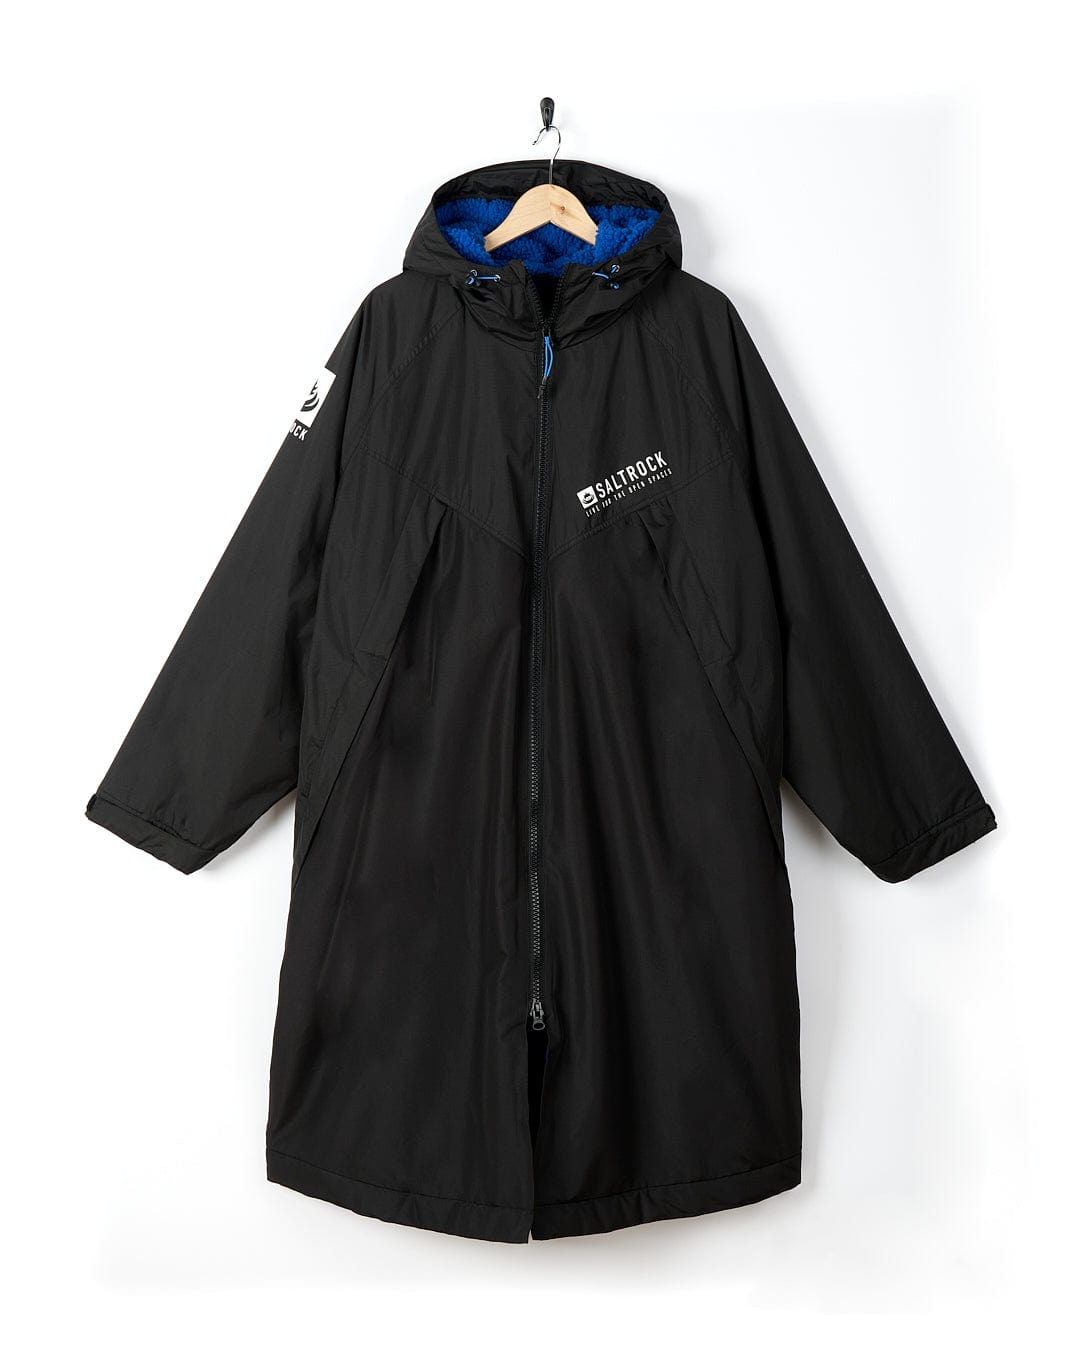 A Saltrock Four Seasons - Waterproof Changing Robe - Black/Blue hooded coat hanging on a hanger.